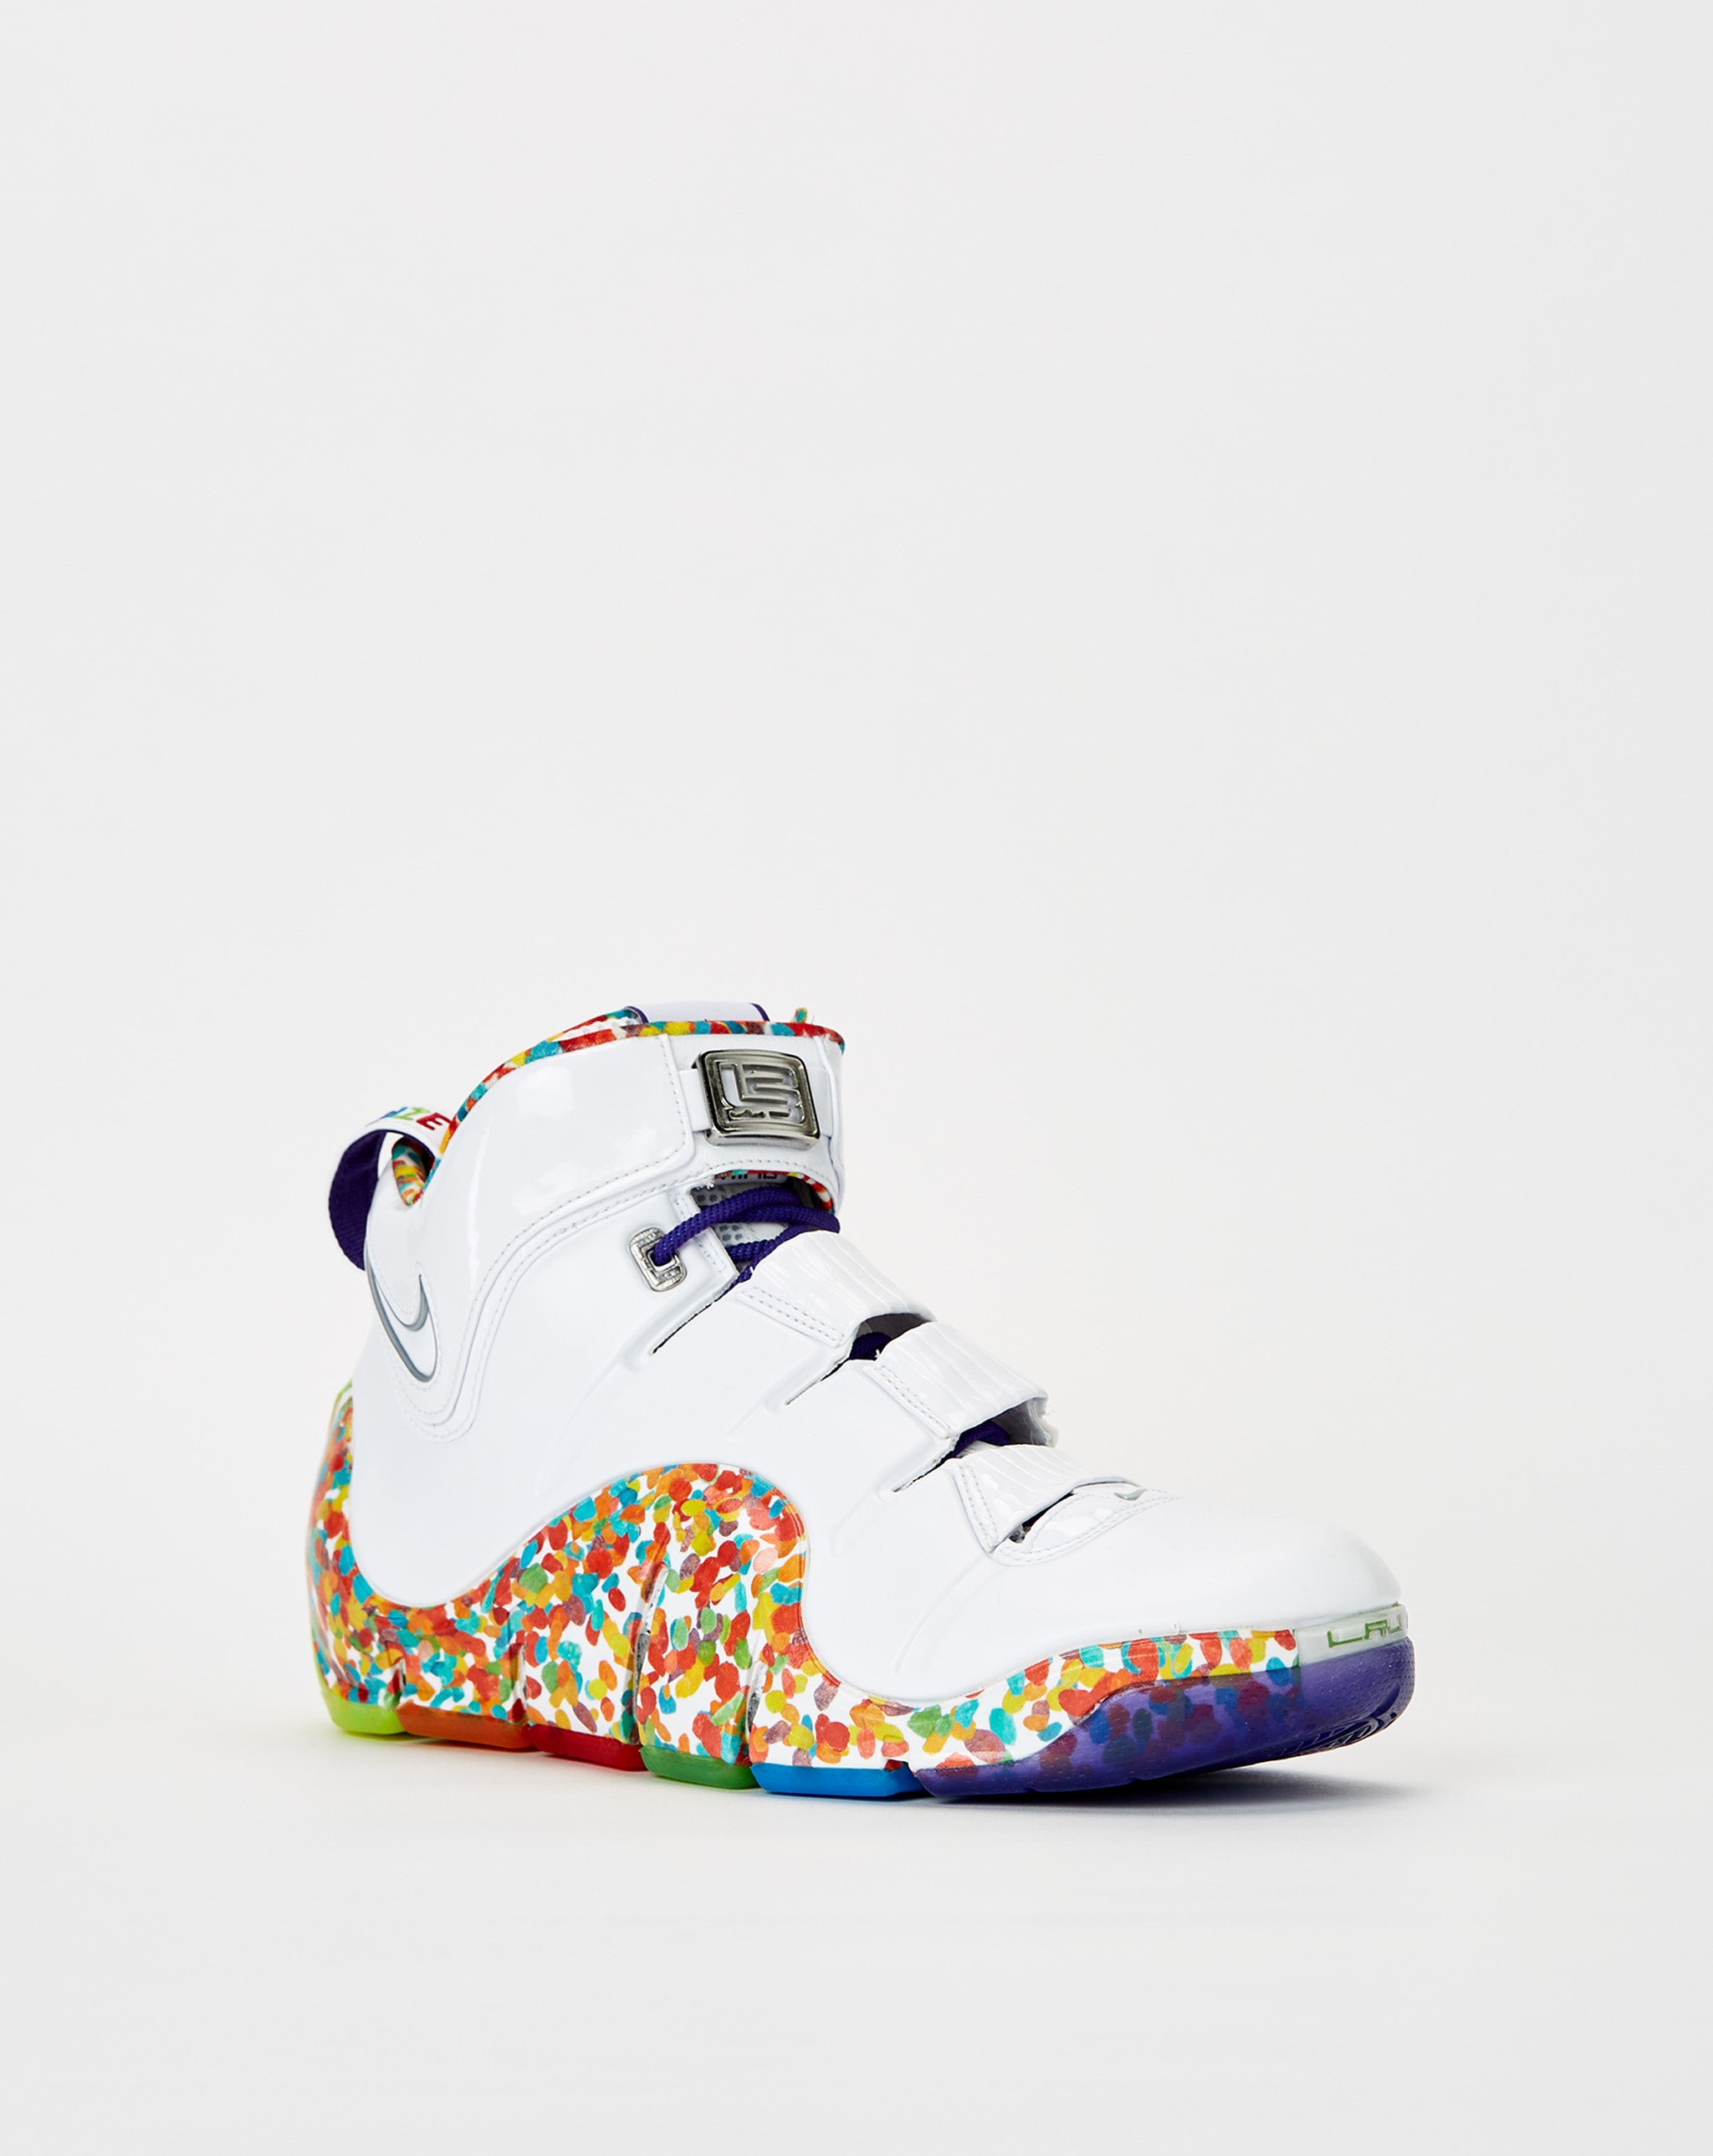 Nike LeBron IV 'Fruity Pebbles'  - Cheap Erlebniswelt-fliegenfischen Jordan outlet